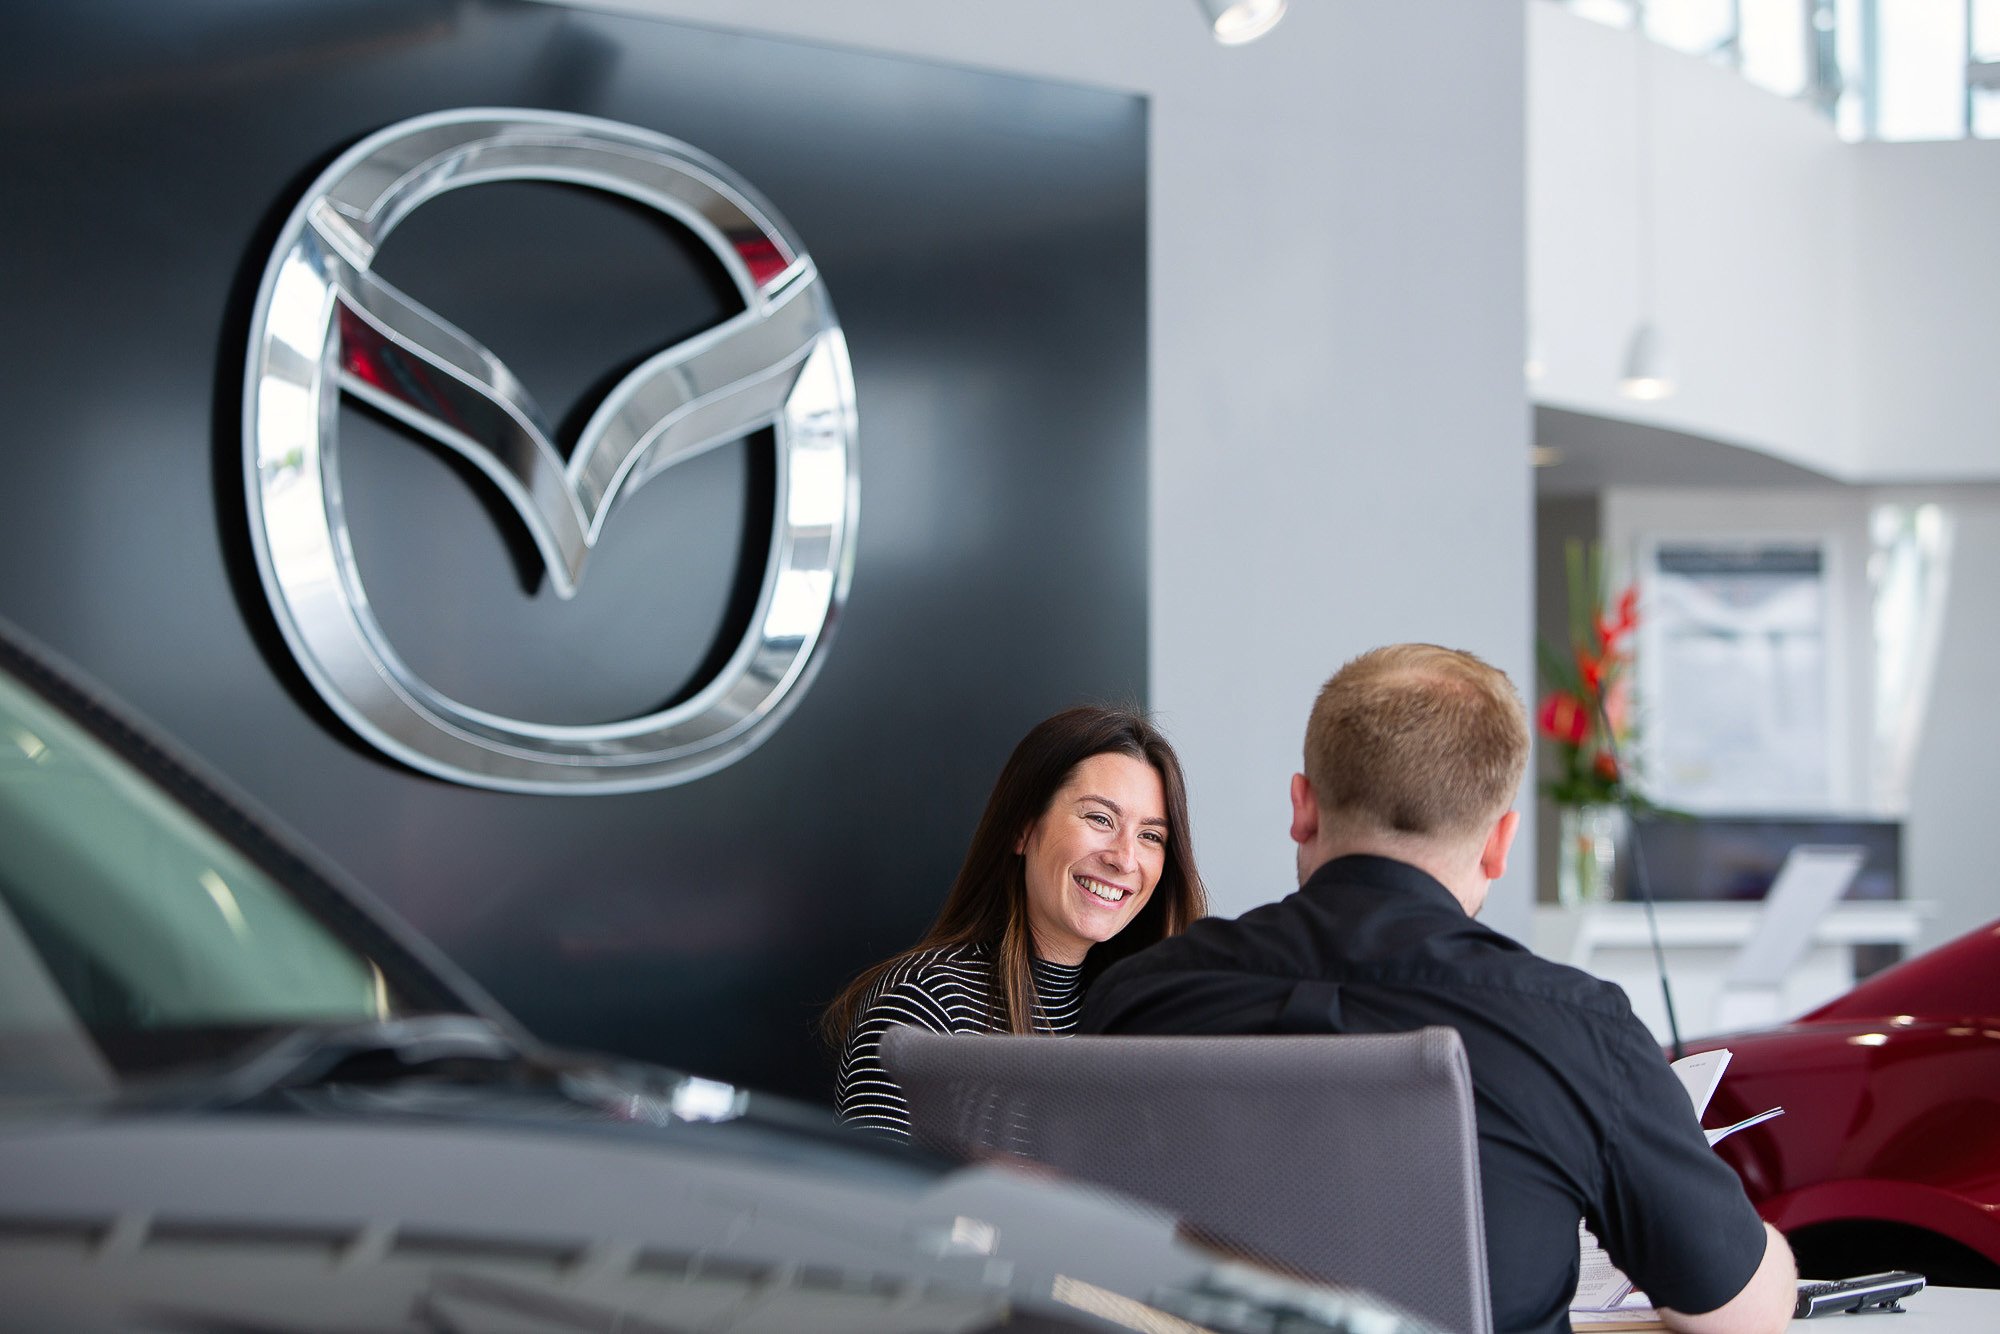 Customer and salesman laughing in Mazda car dealership.jpg